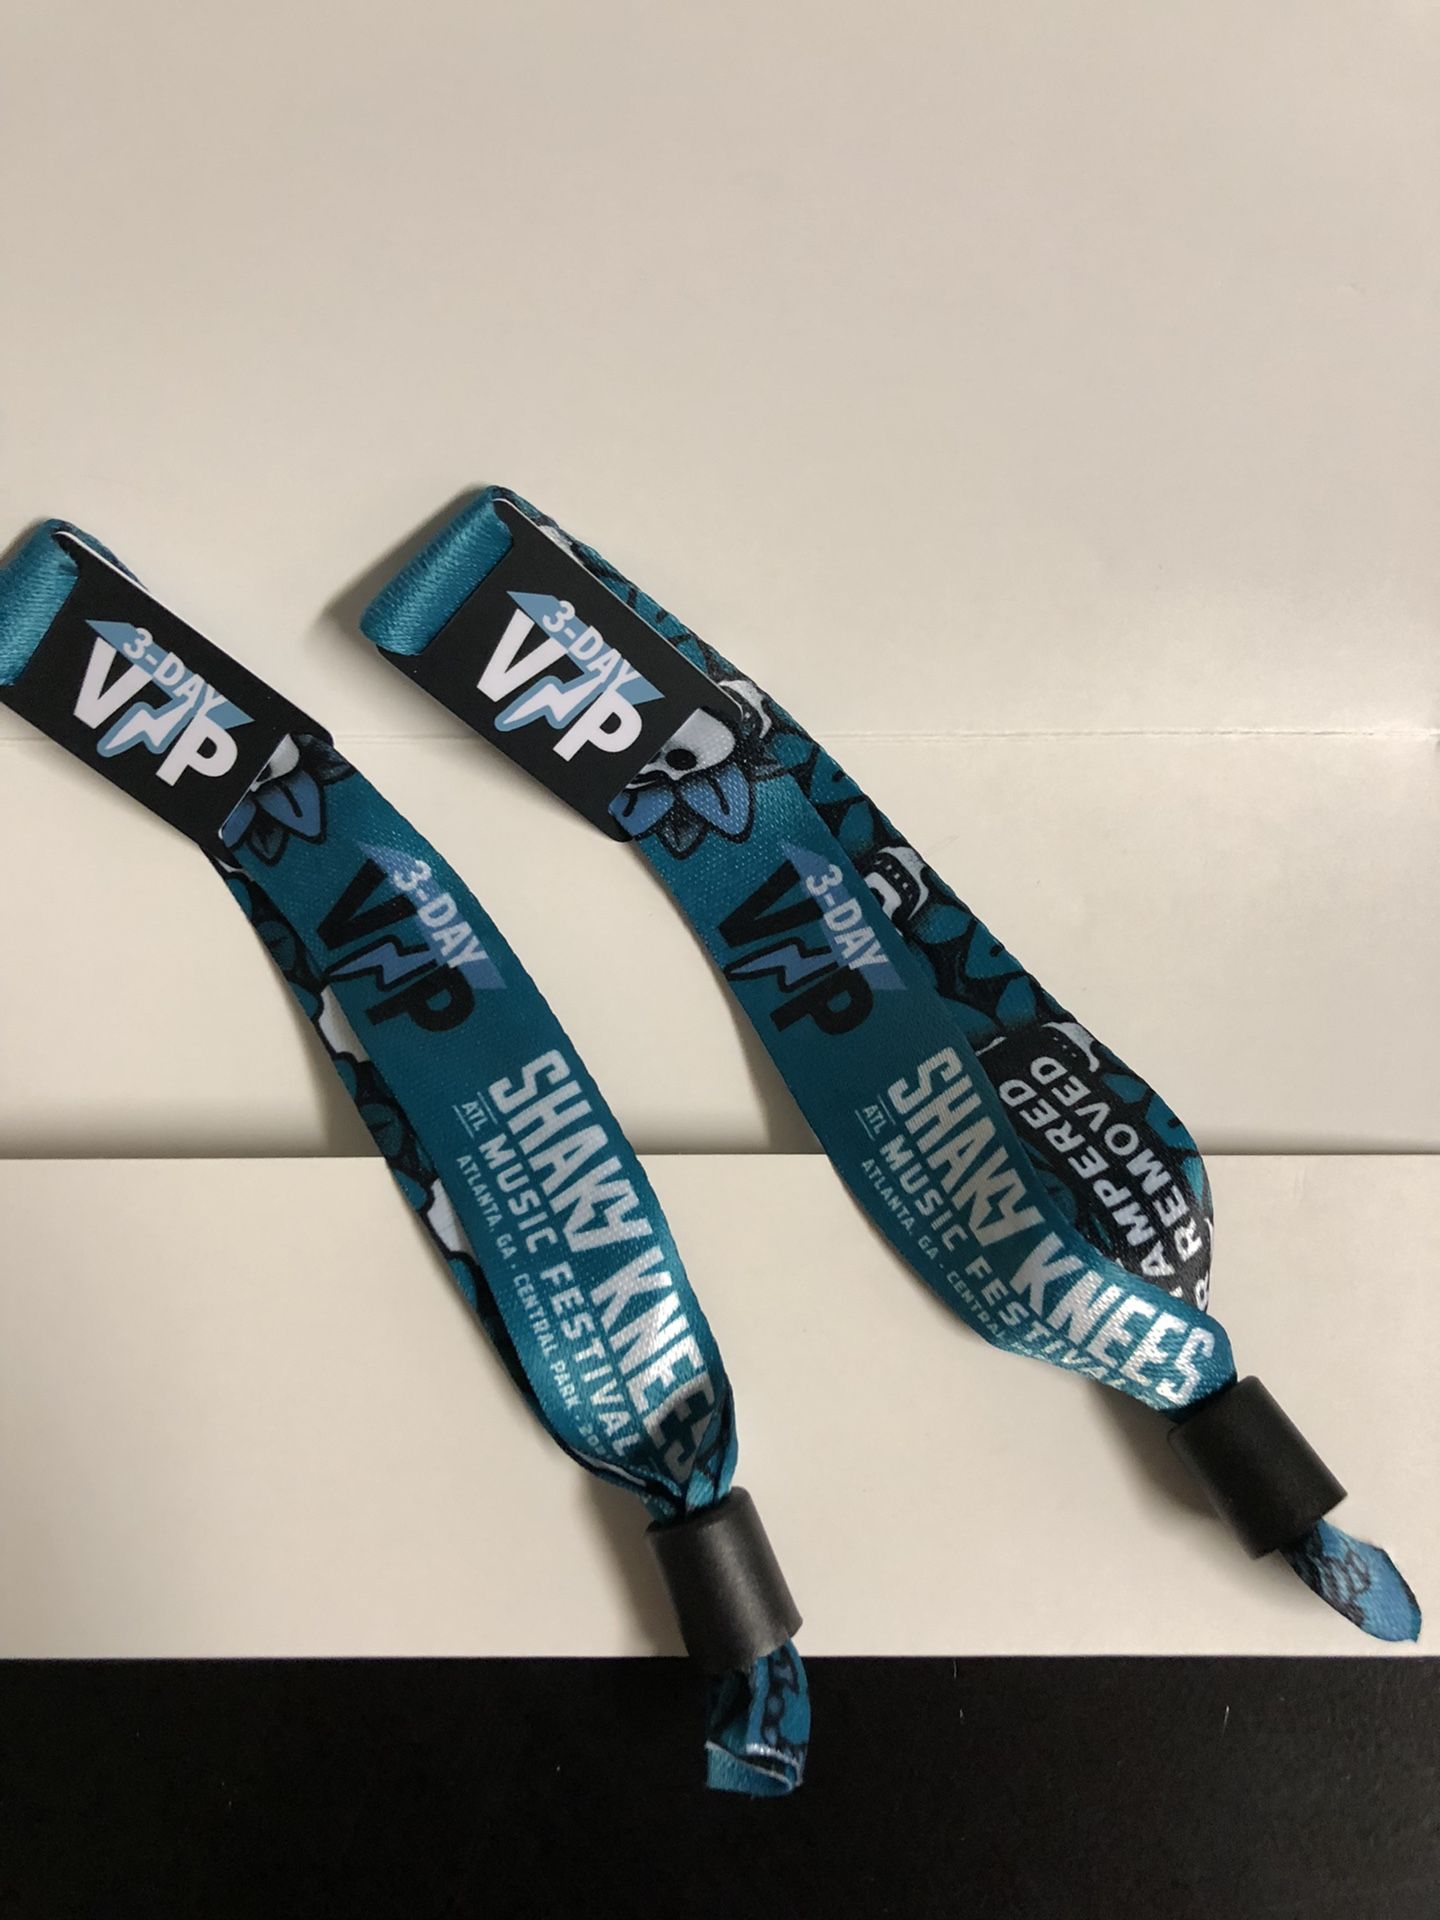 Two(2) 3-Day VIP Tickets - Shaky Knees Music Festival in Atlanta, GA Oct. 22-24.